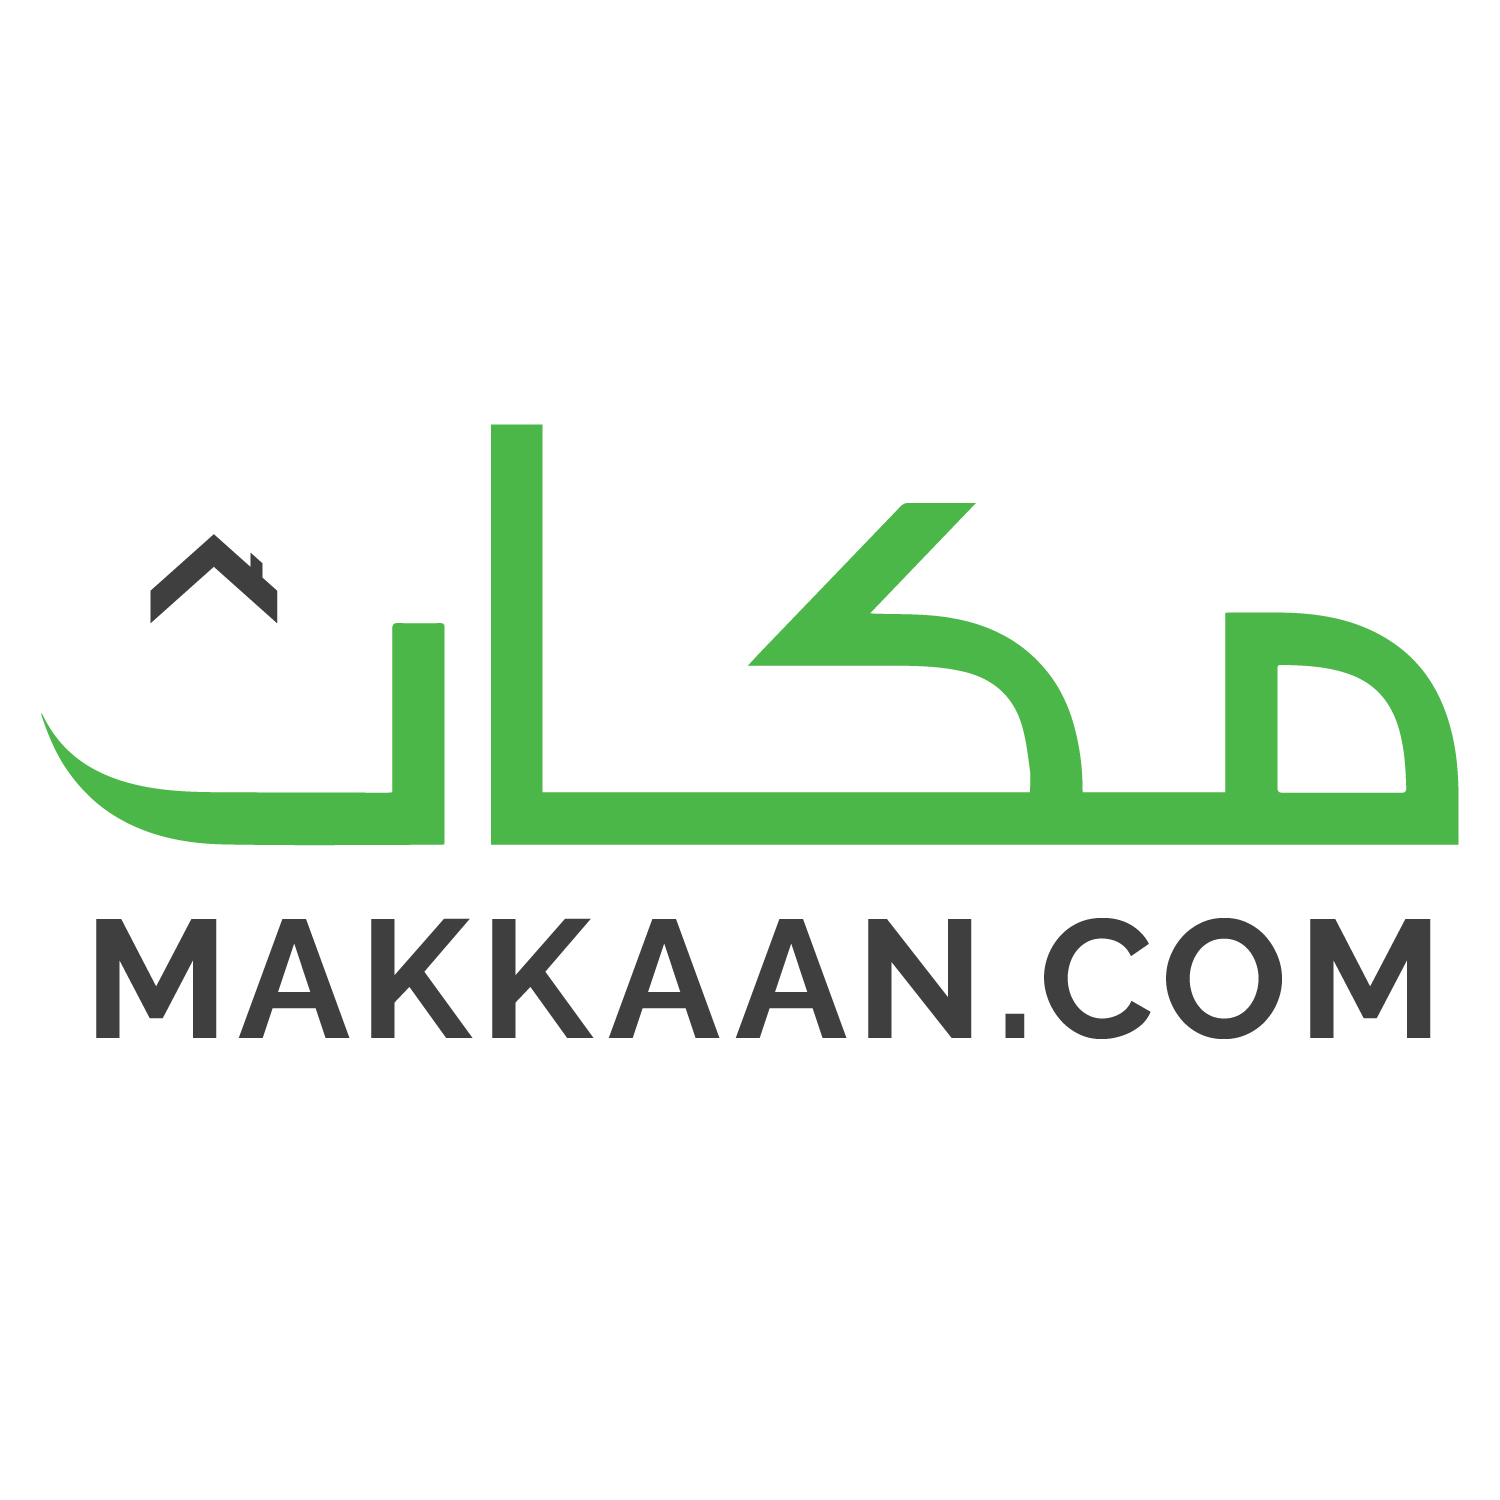 Makkaan.com